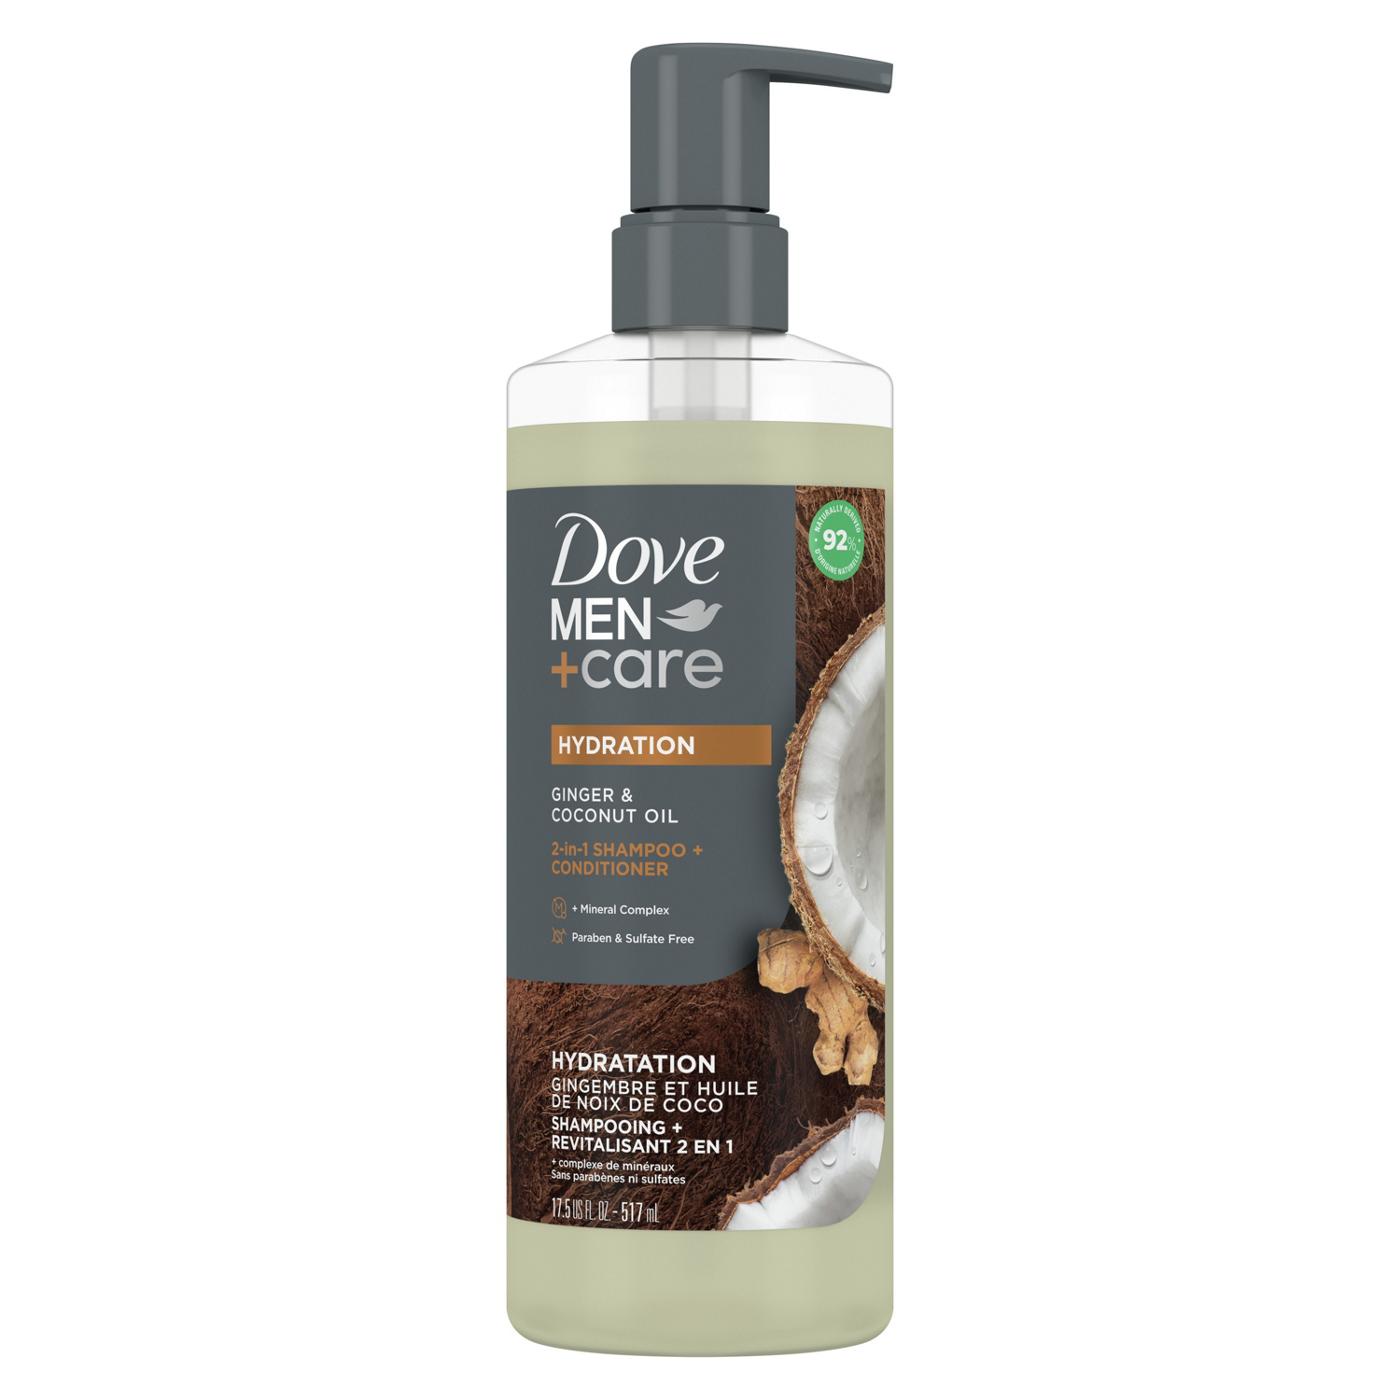 Dove Men+Care Hydration 2 In 1 Shampoo + Conditioner - Ginger & Coconut Oil; image 1 of 3